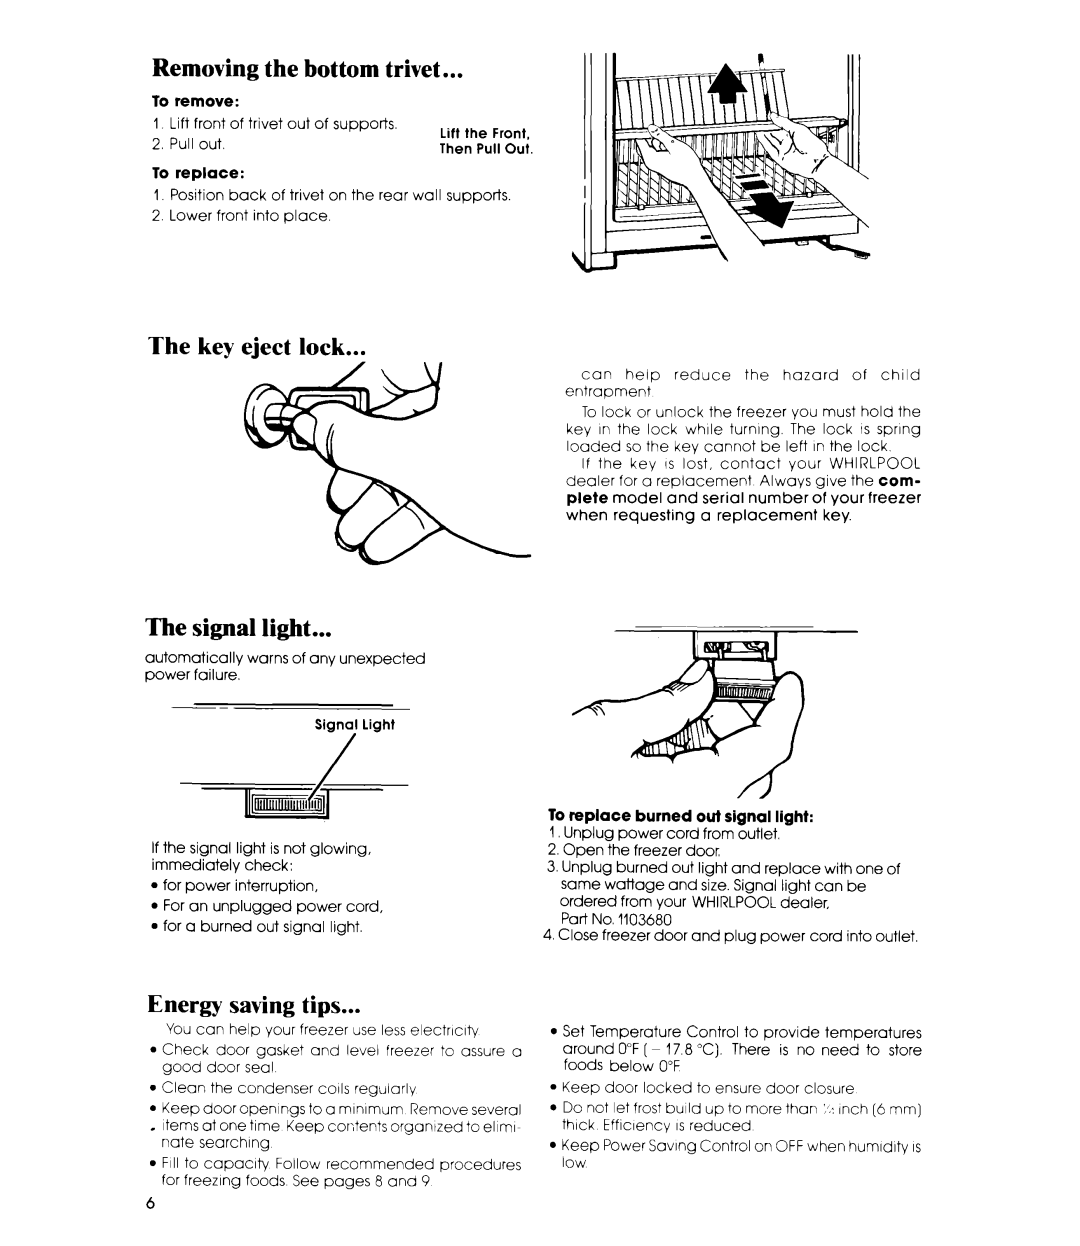 Whirlpool EVISOF manual Removing the bottom trivet, The key eject lock, The signal light, Energy saving tips 